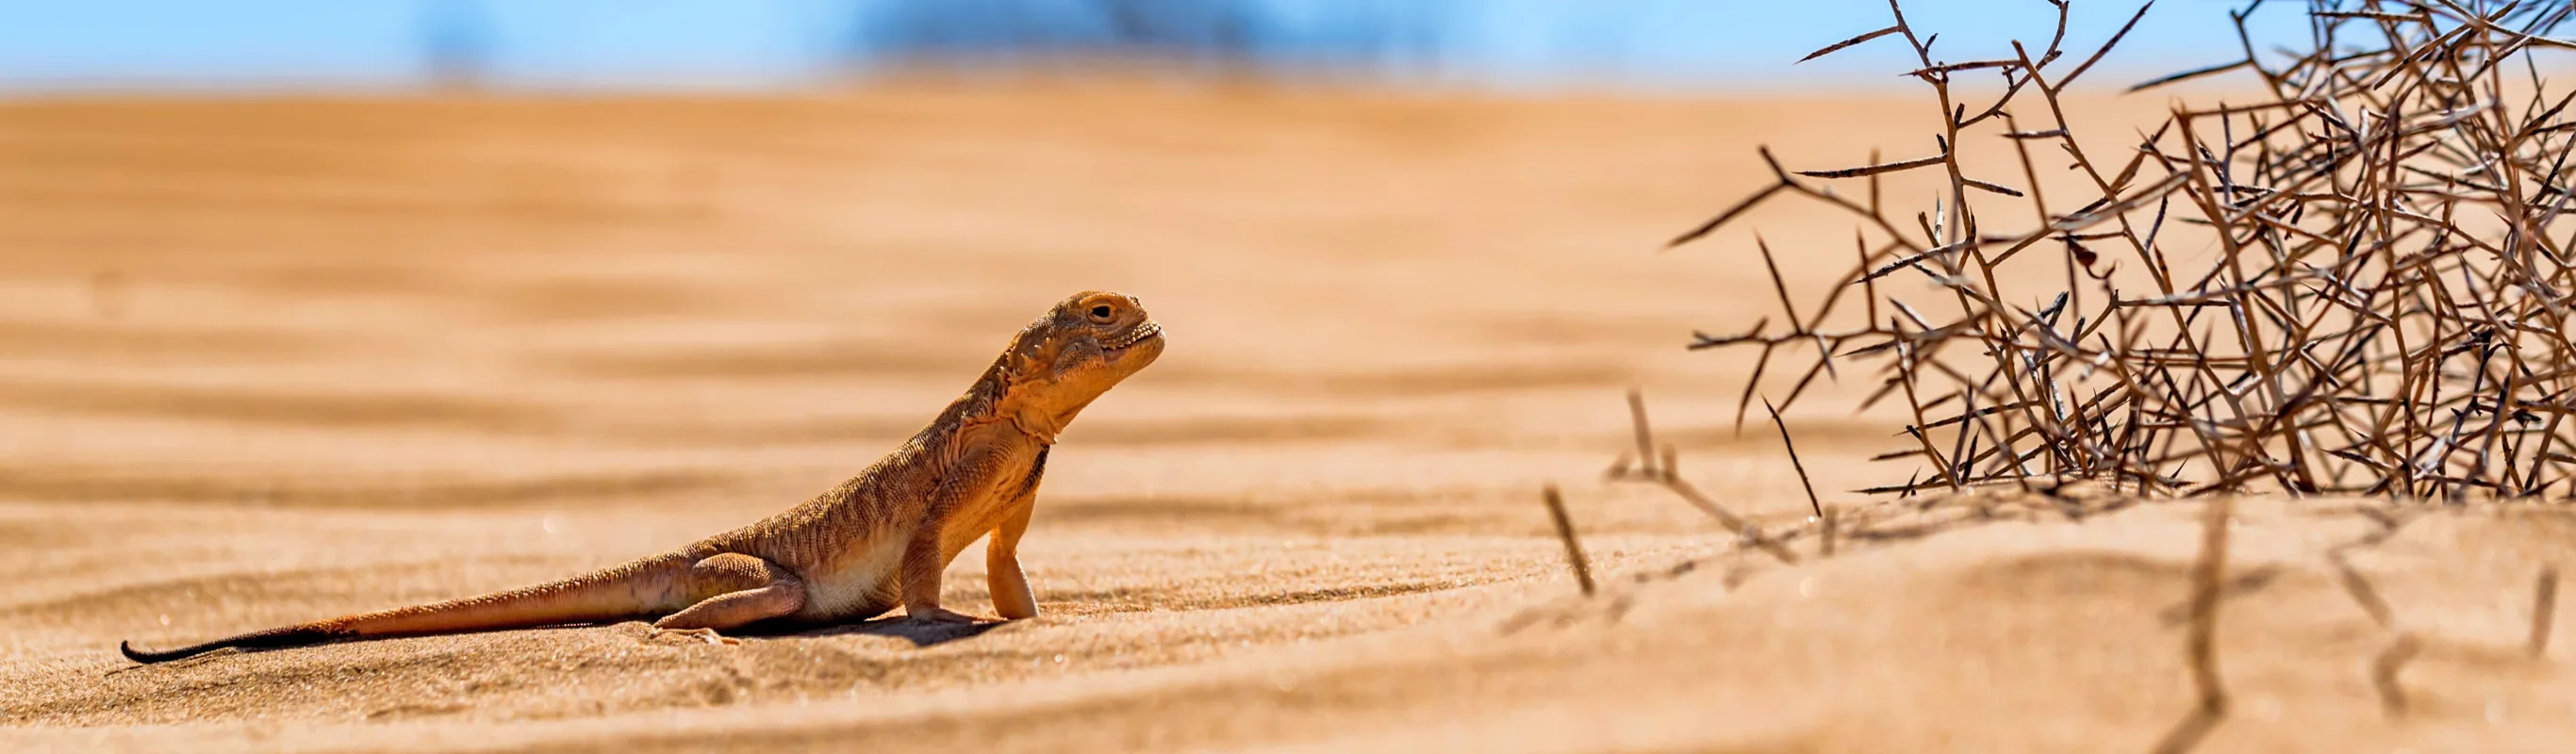 lizard in the sand